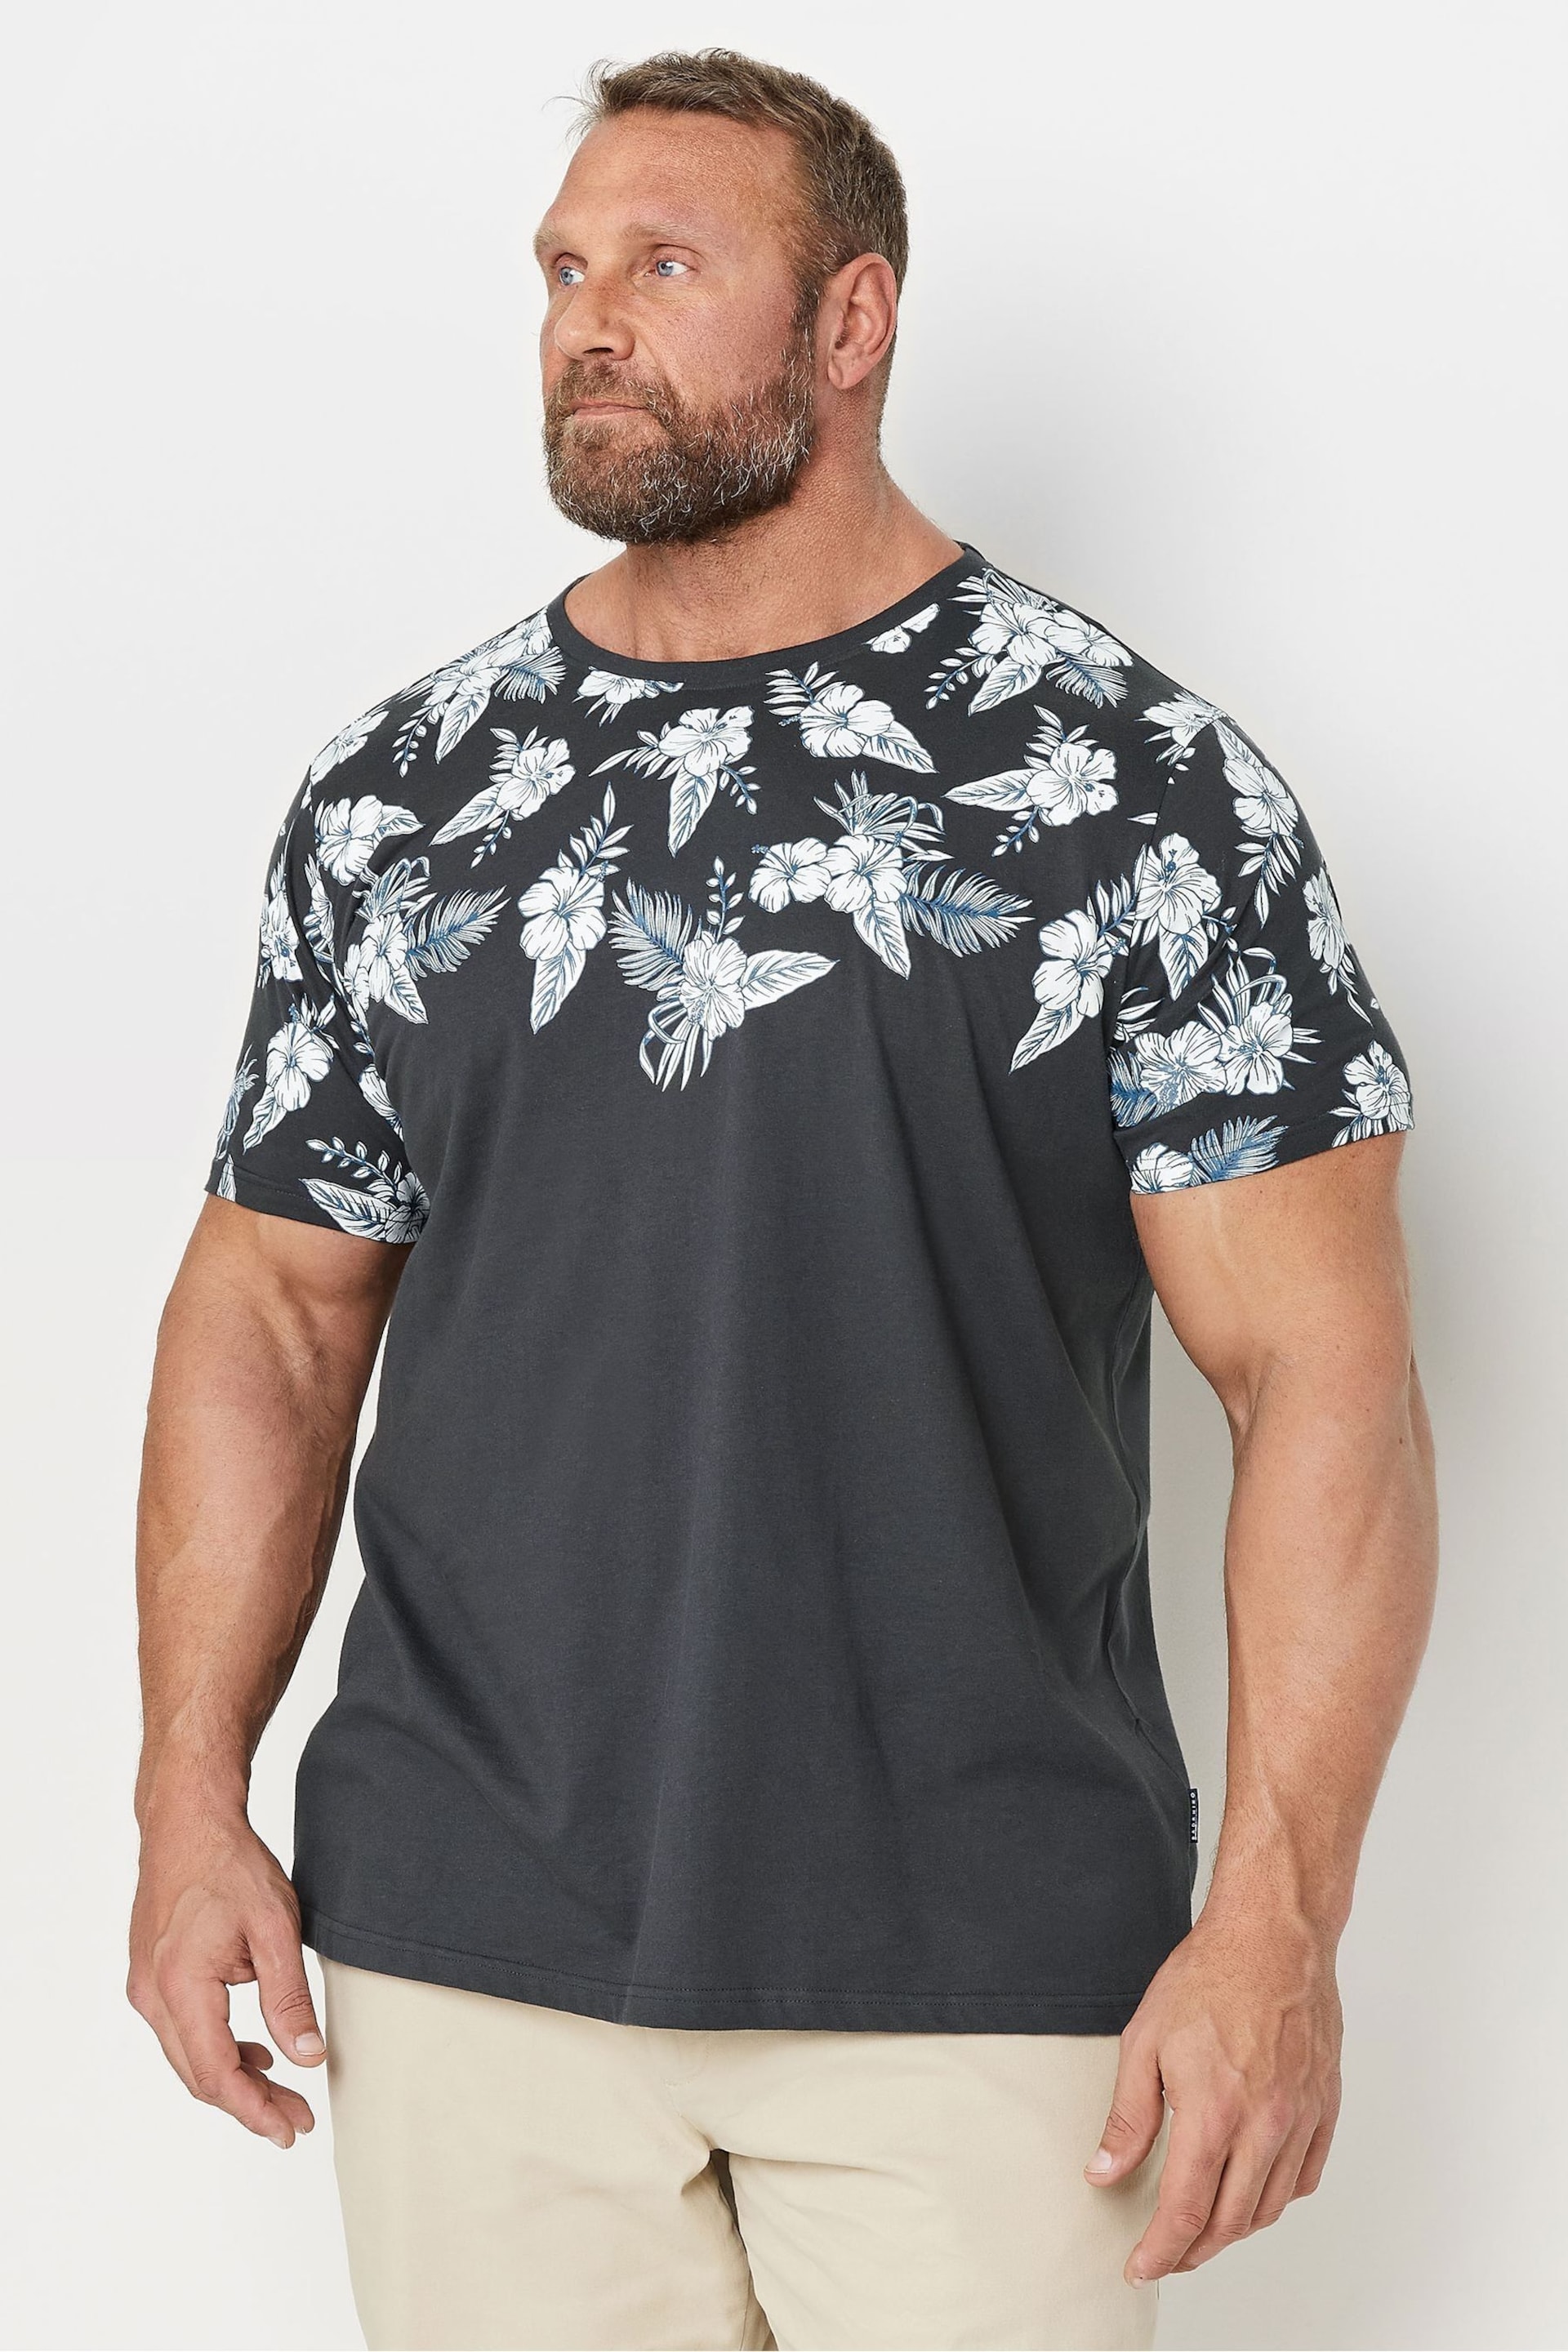 BadRhino Big & Tall Grey Border T-Shirt - Image 1 of 3